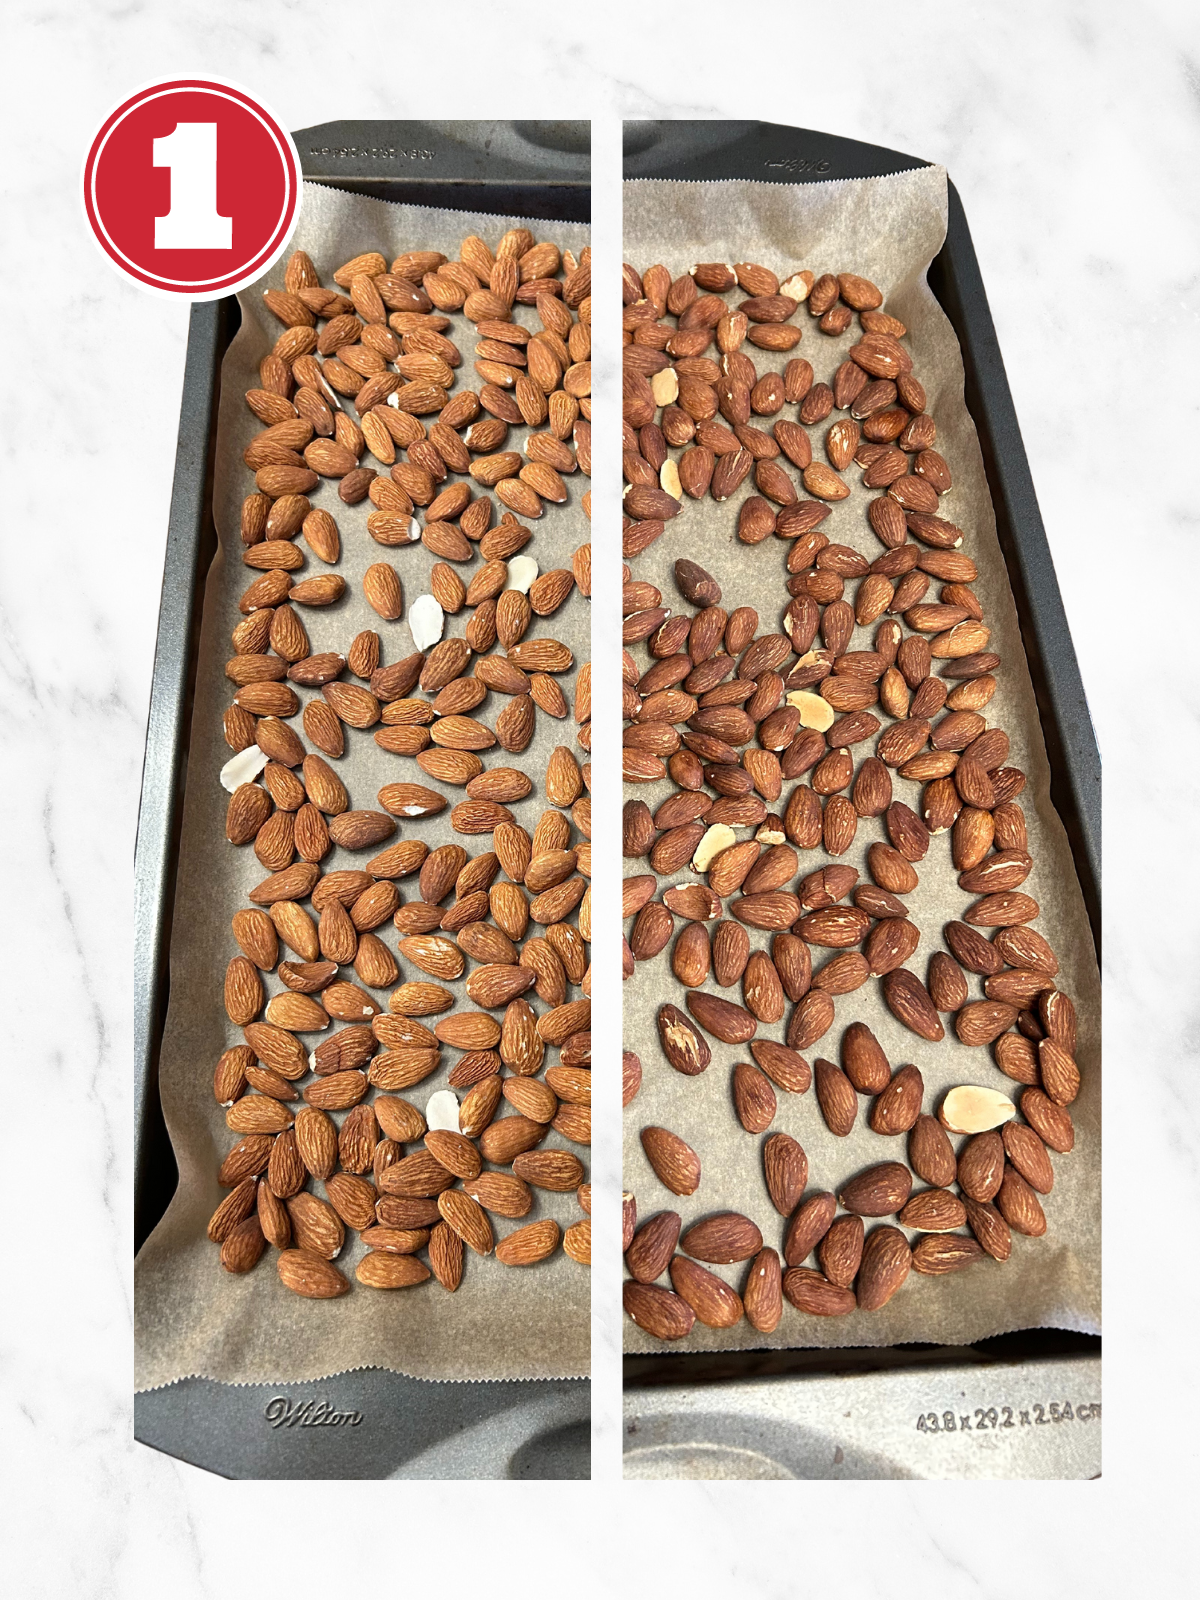 Raw almonds on a baking sheet